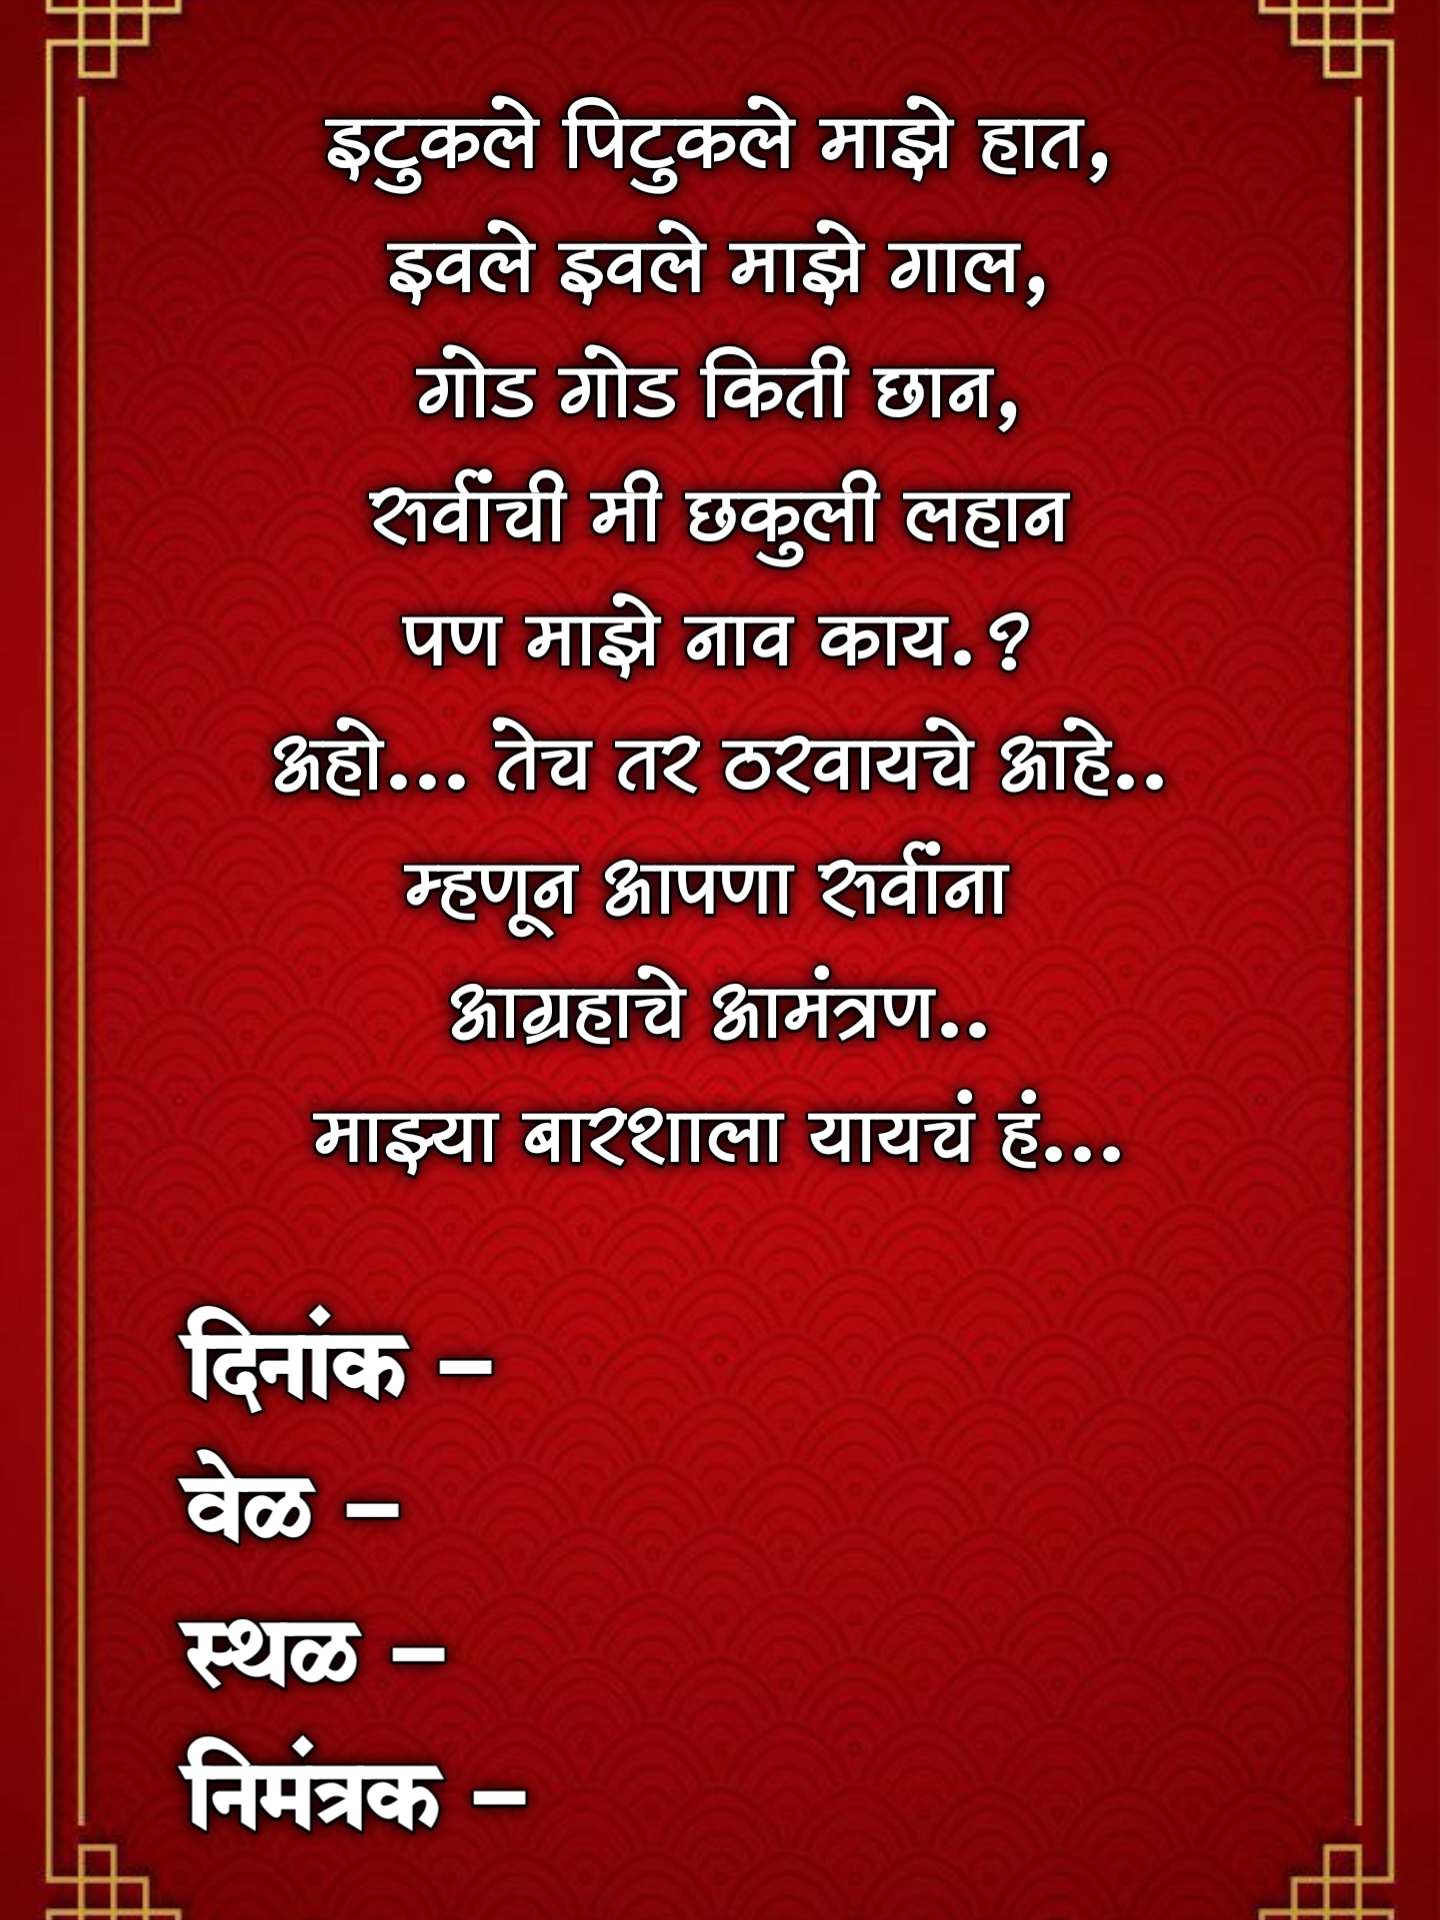 Barsa Invitation Card In Marathi 4 -